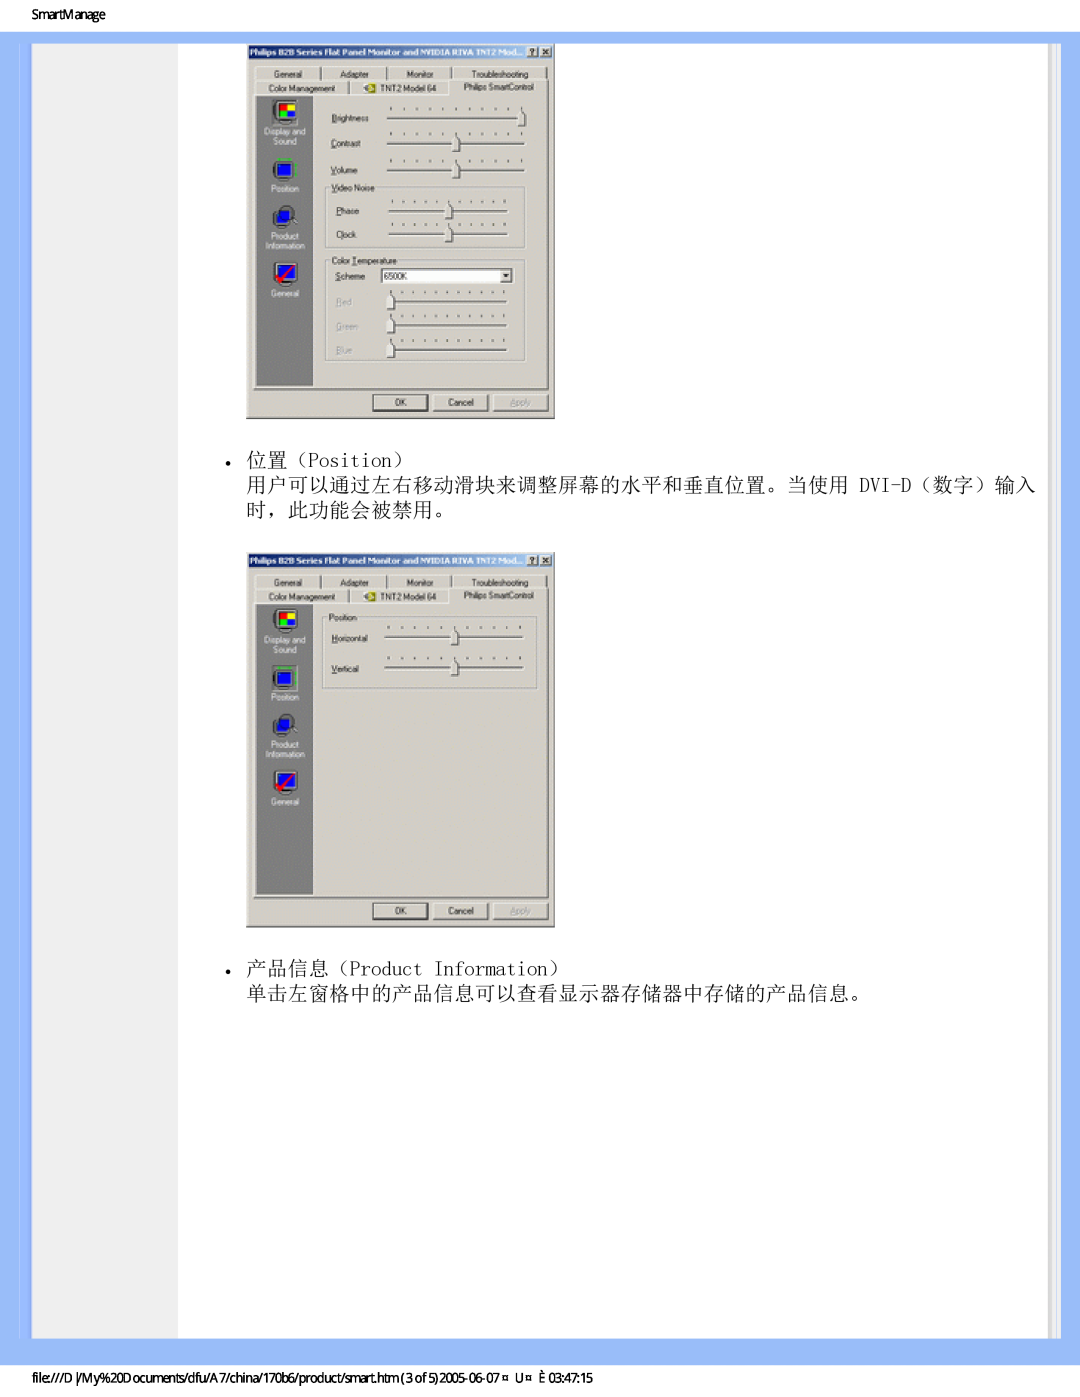 Philips 170B6 user manual 位置（Position）, 产品信息（Product Information）, 单击左窗格中的产品信息可以查看显示器存储器中存储的产品信息。, SmartManage 